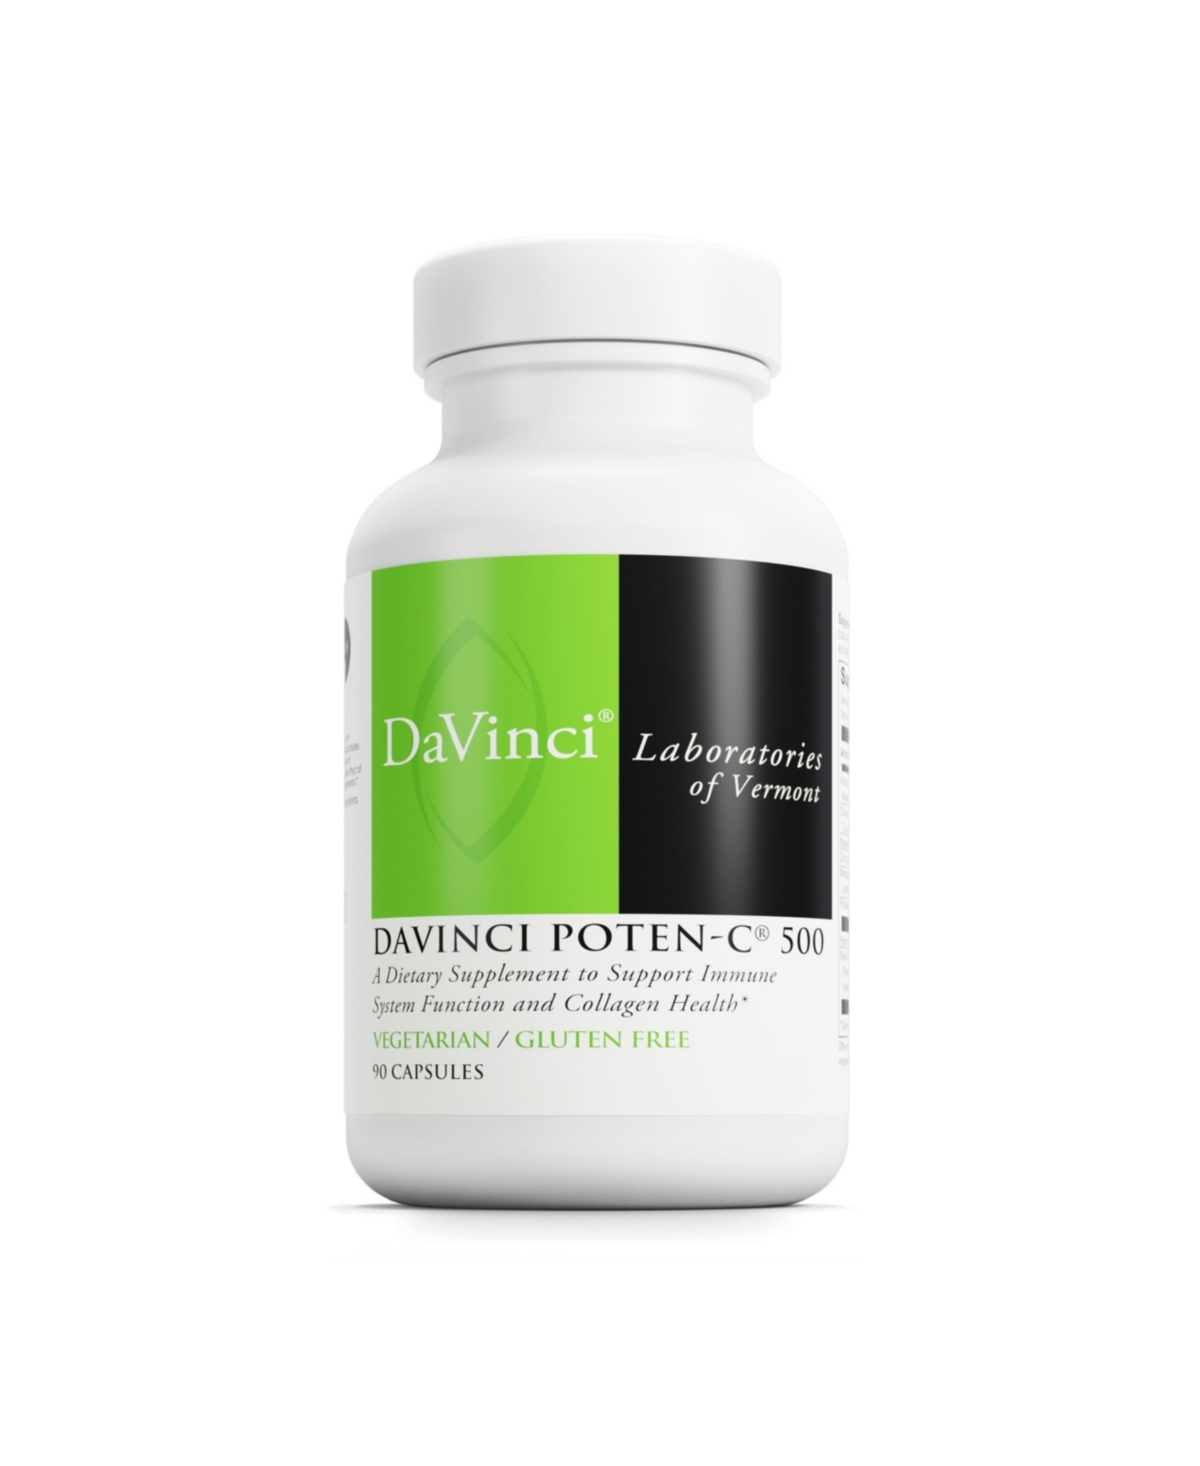 DaVinci Labs Poten-c 500 - Dietary Supplement to Support Immune System Function & Collagen Health - With Vitamin C, Calcium, Magnesium, Potassium, and